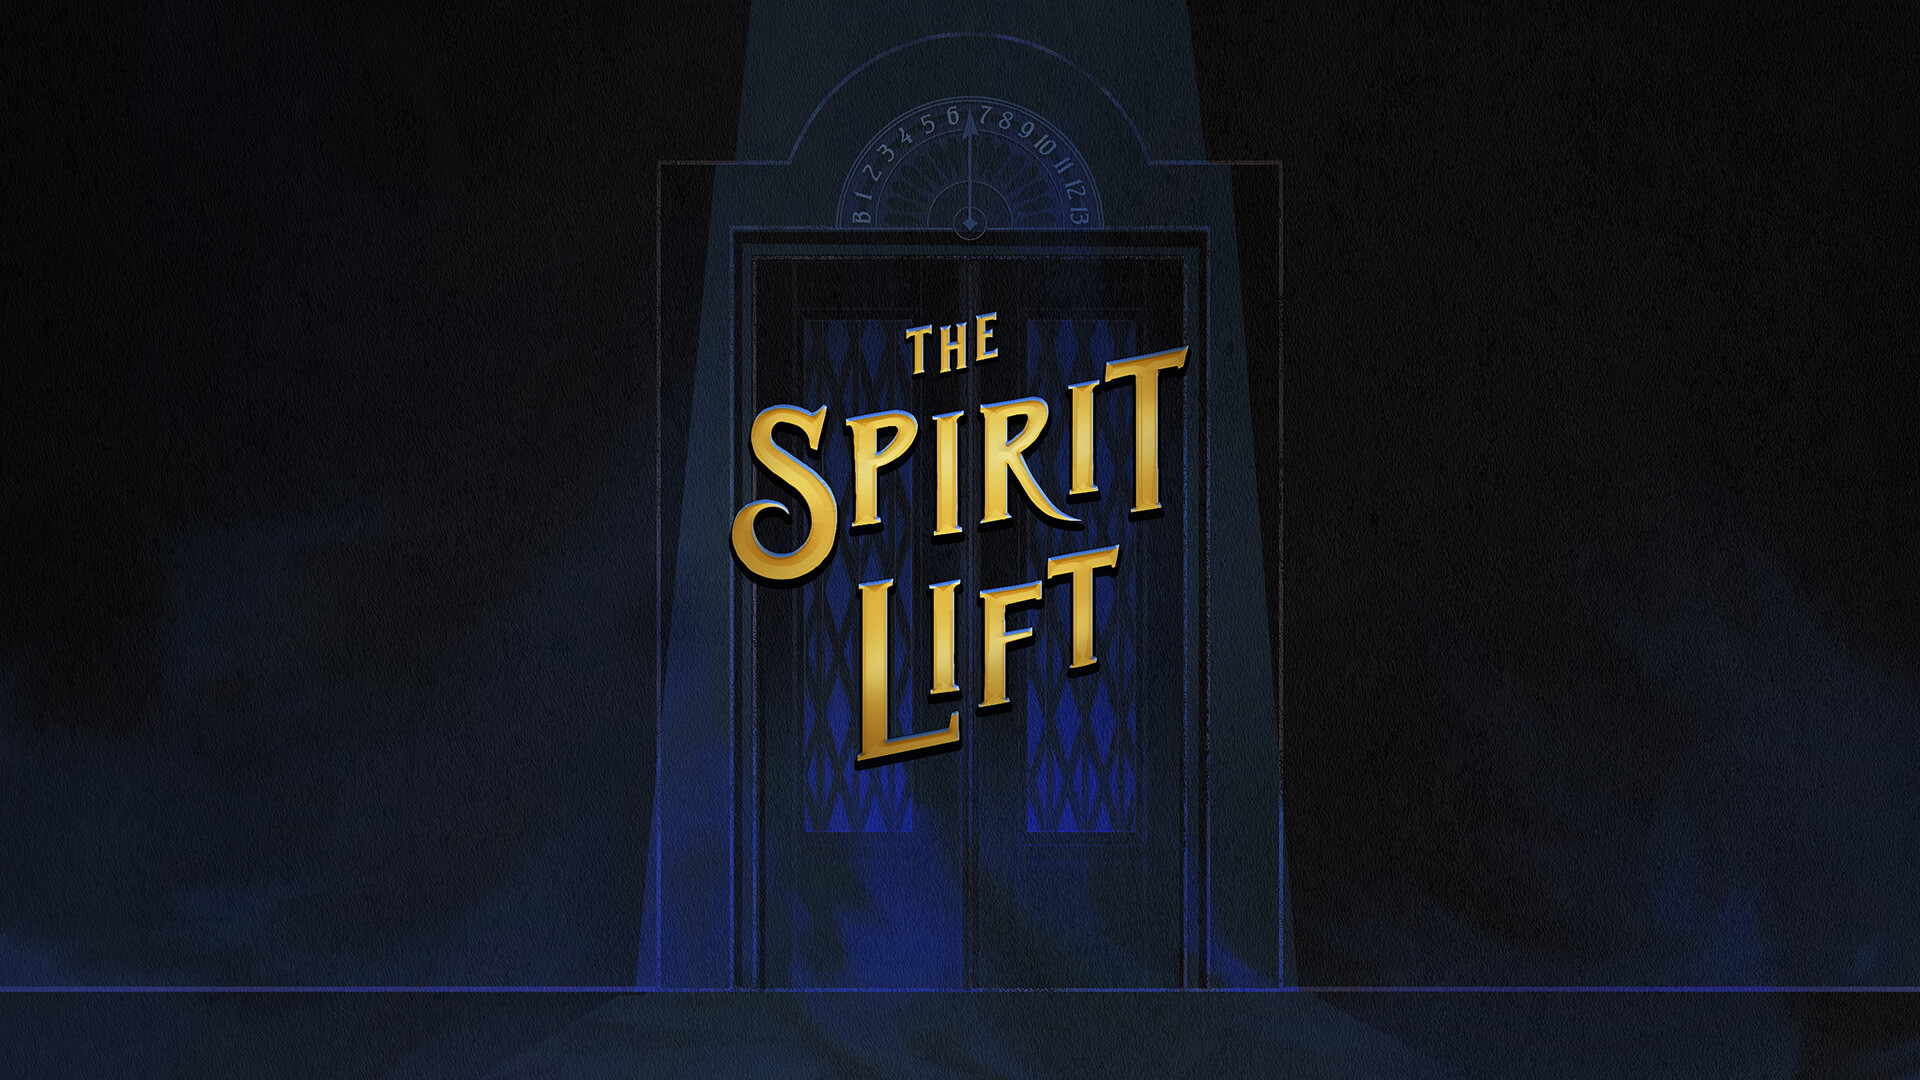 THE SPIRIT LIFT